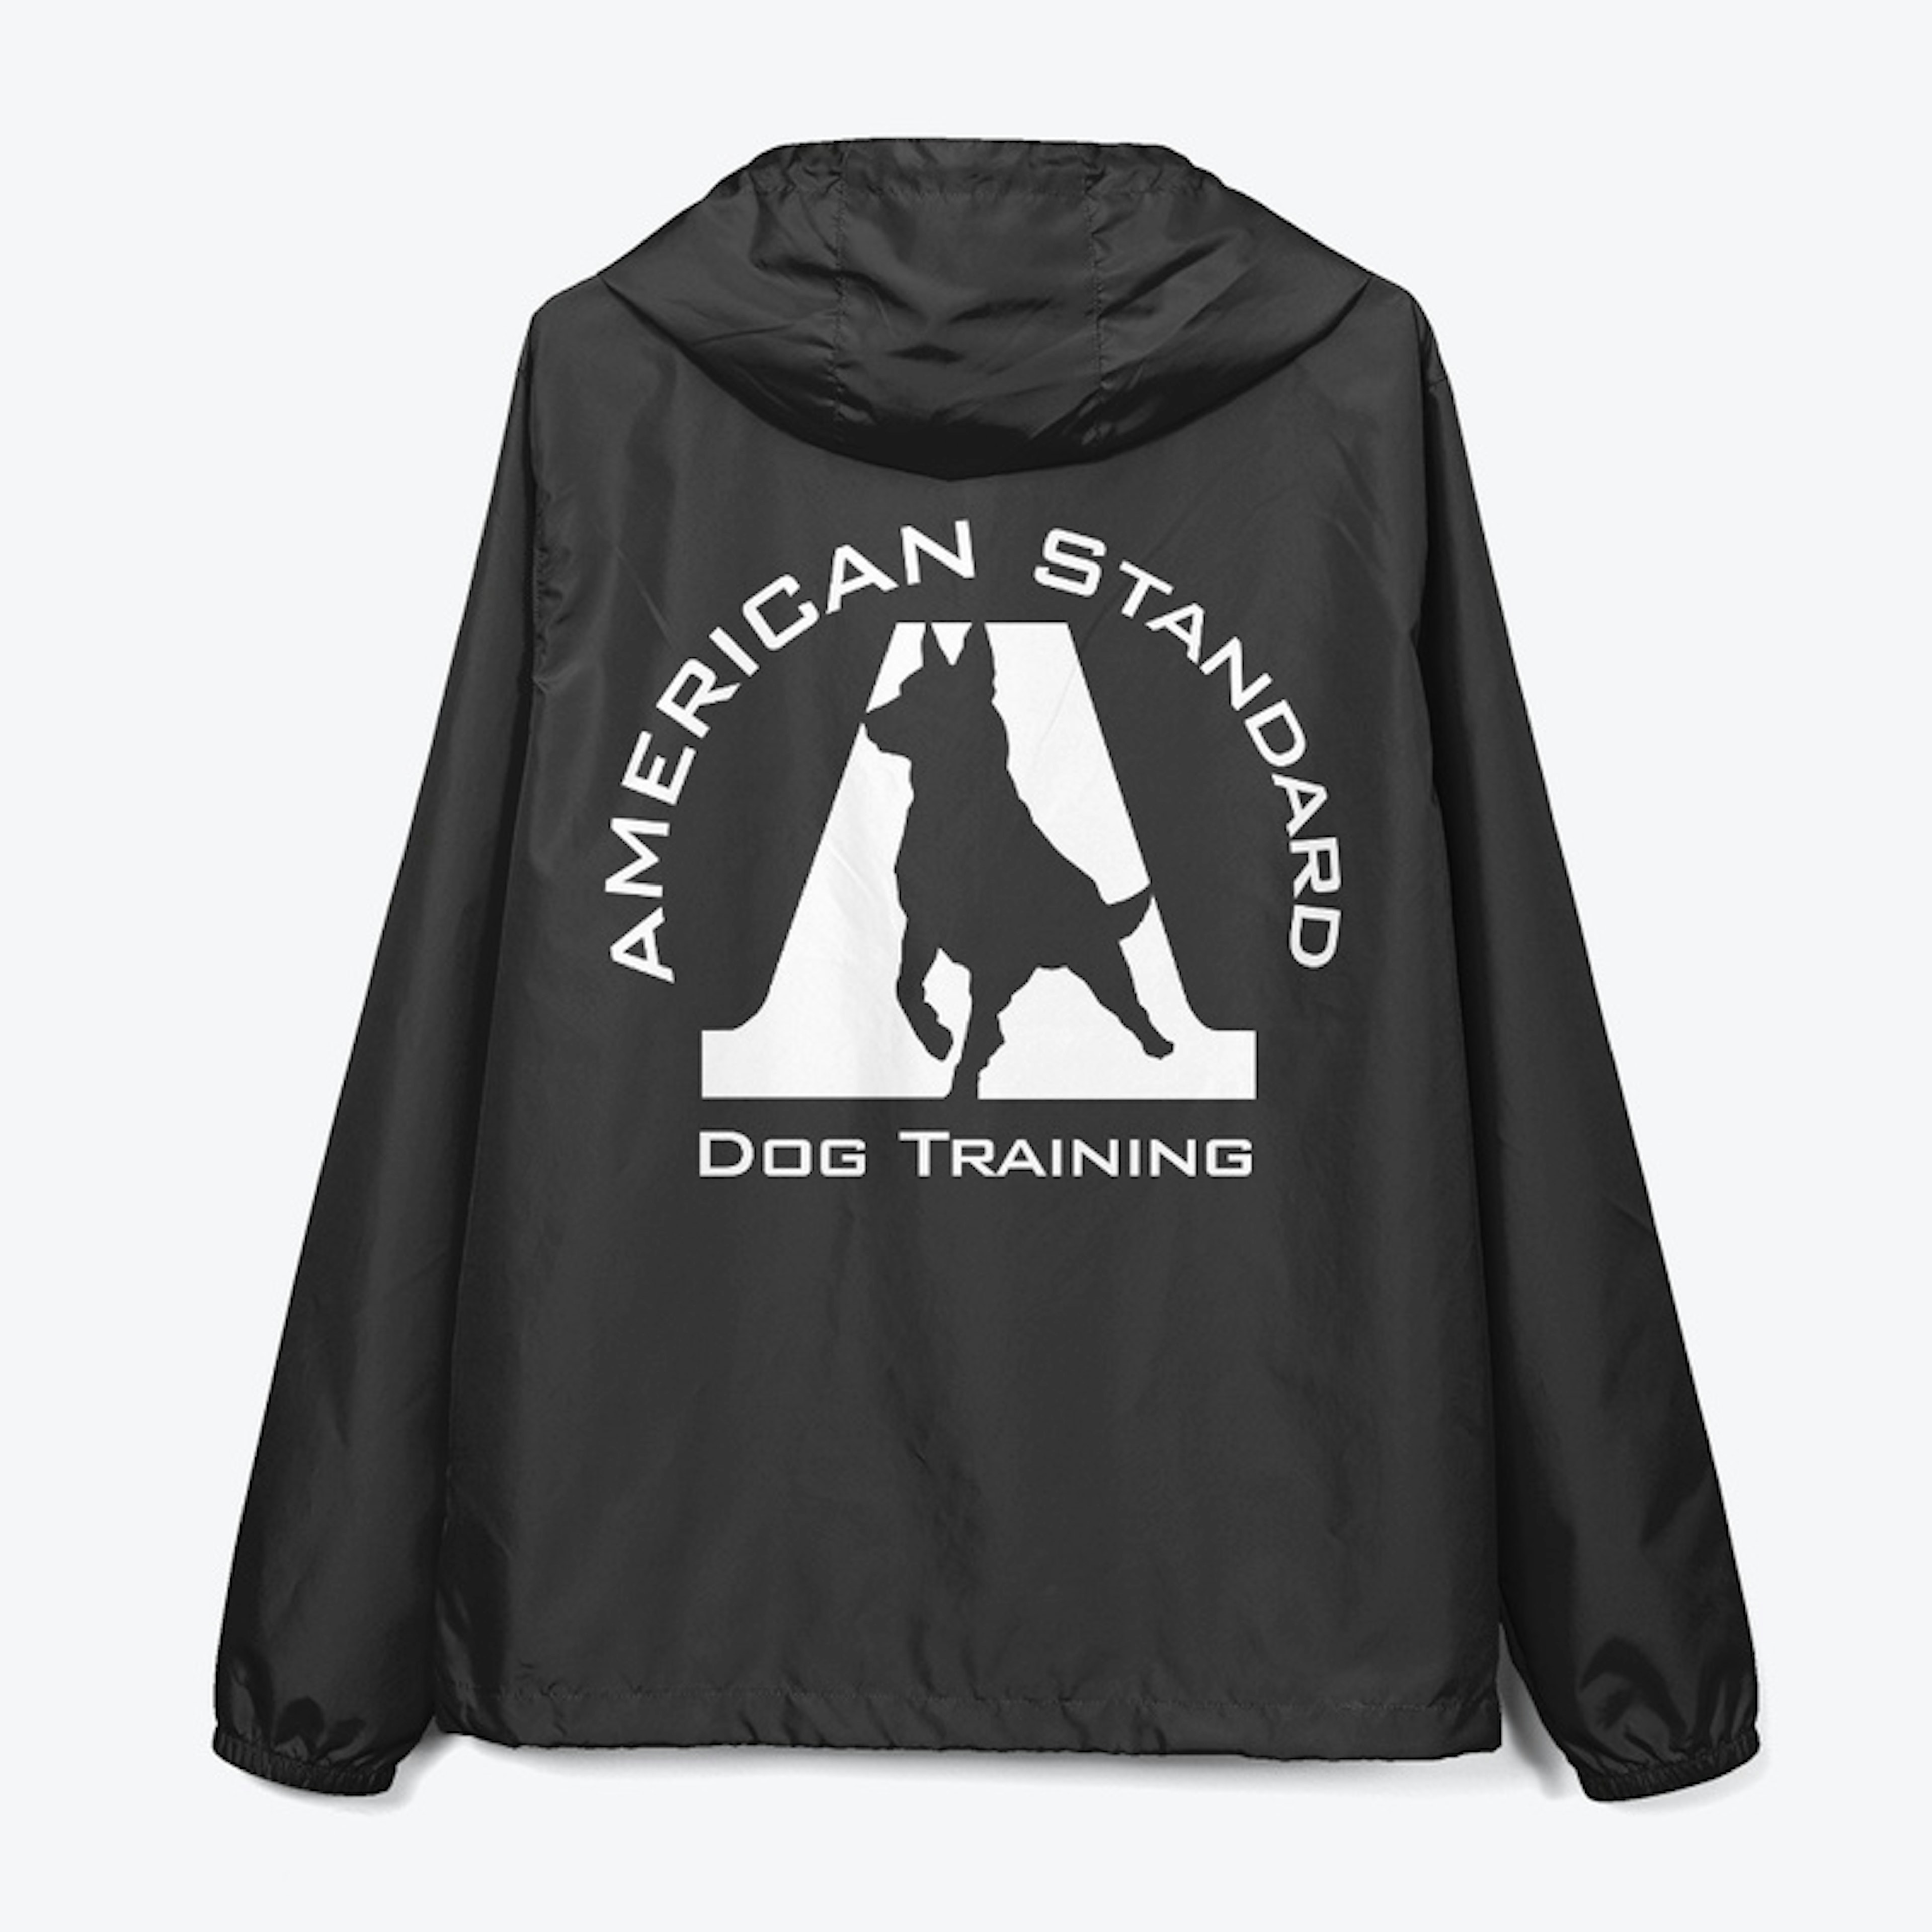 American Standard Dog Training